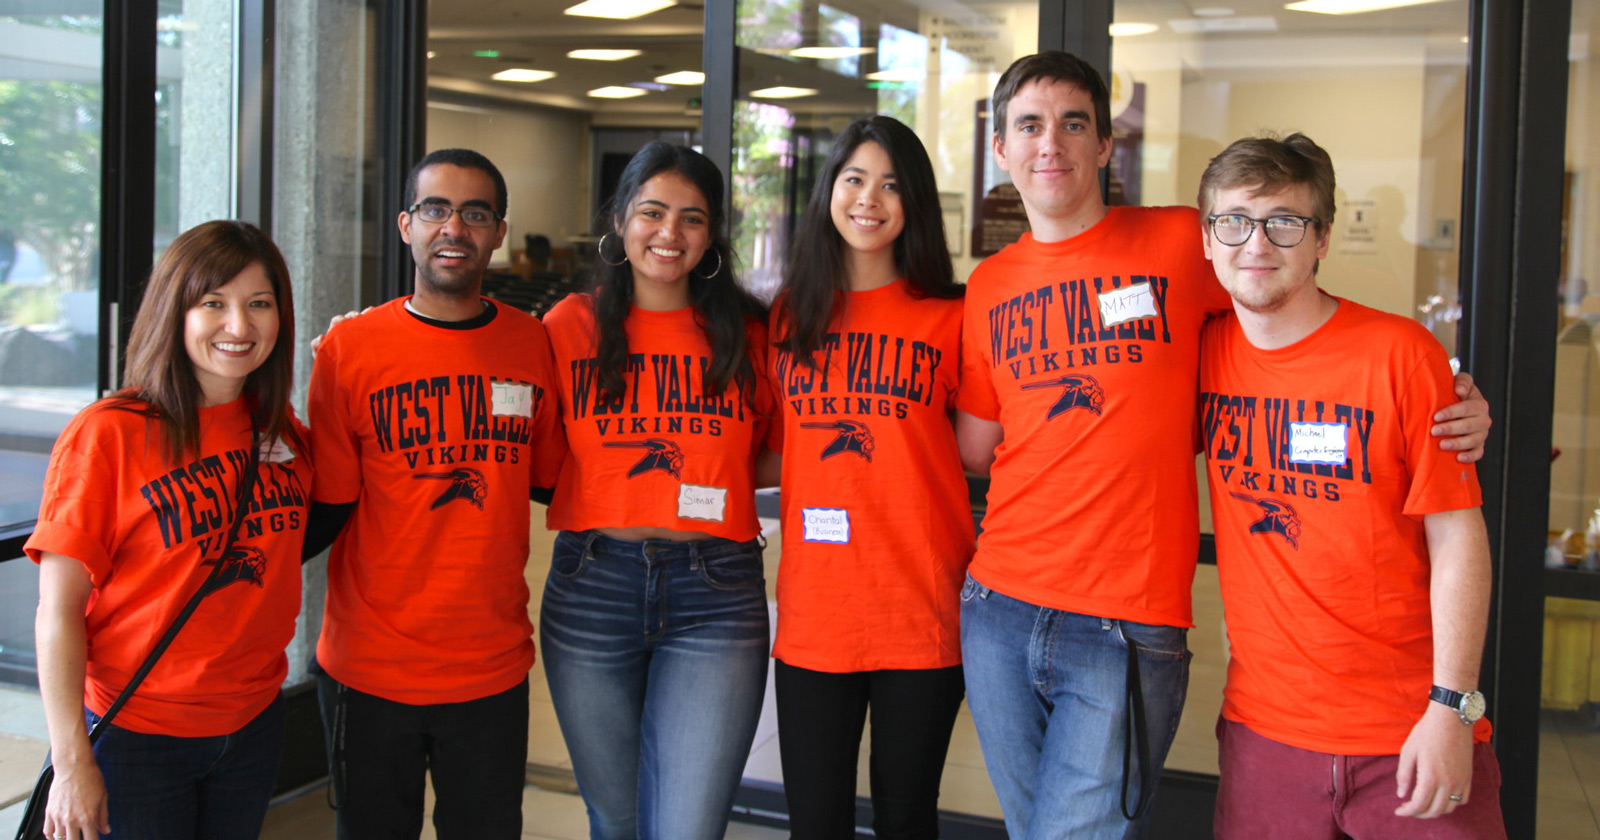 Students wearing orange shirts